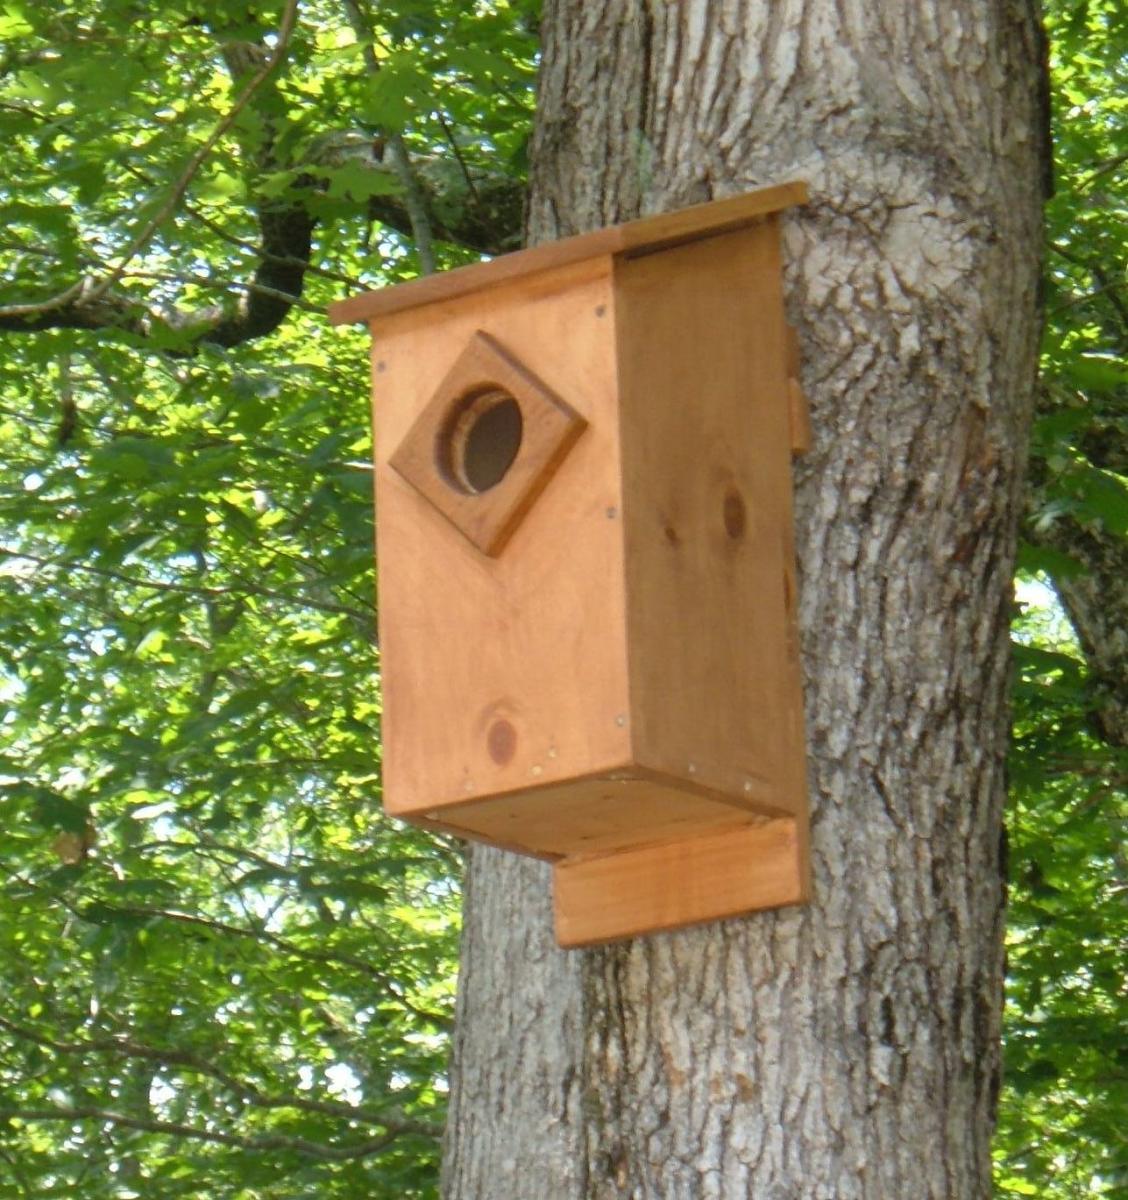 Can I Make an Owl’s Nest on My House?